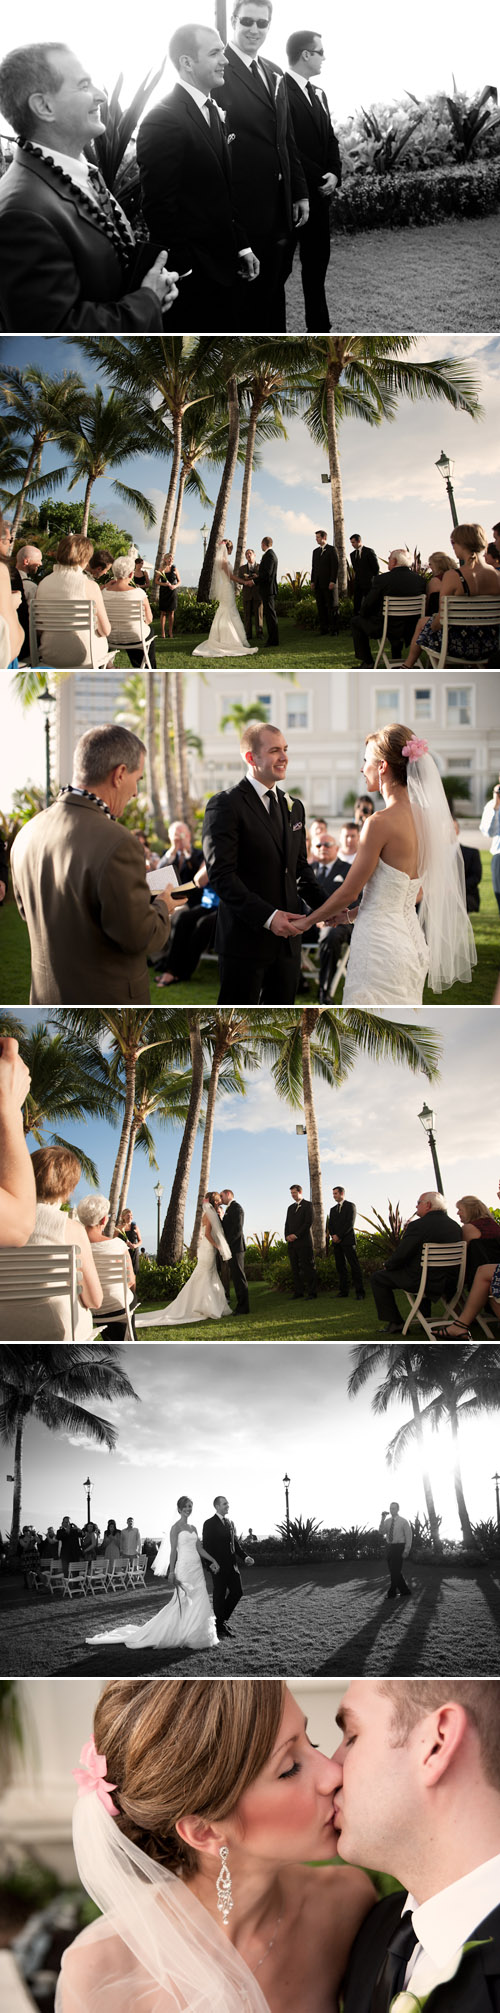 beachfront destination wedding at Westin Moana Surfrider, Waikiki, Hawaii, photography by Derek Wong